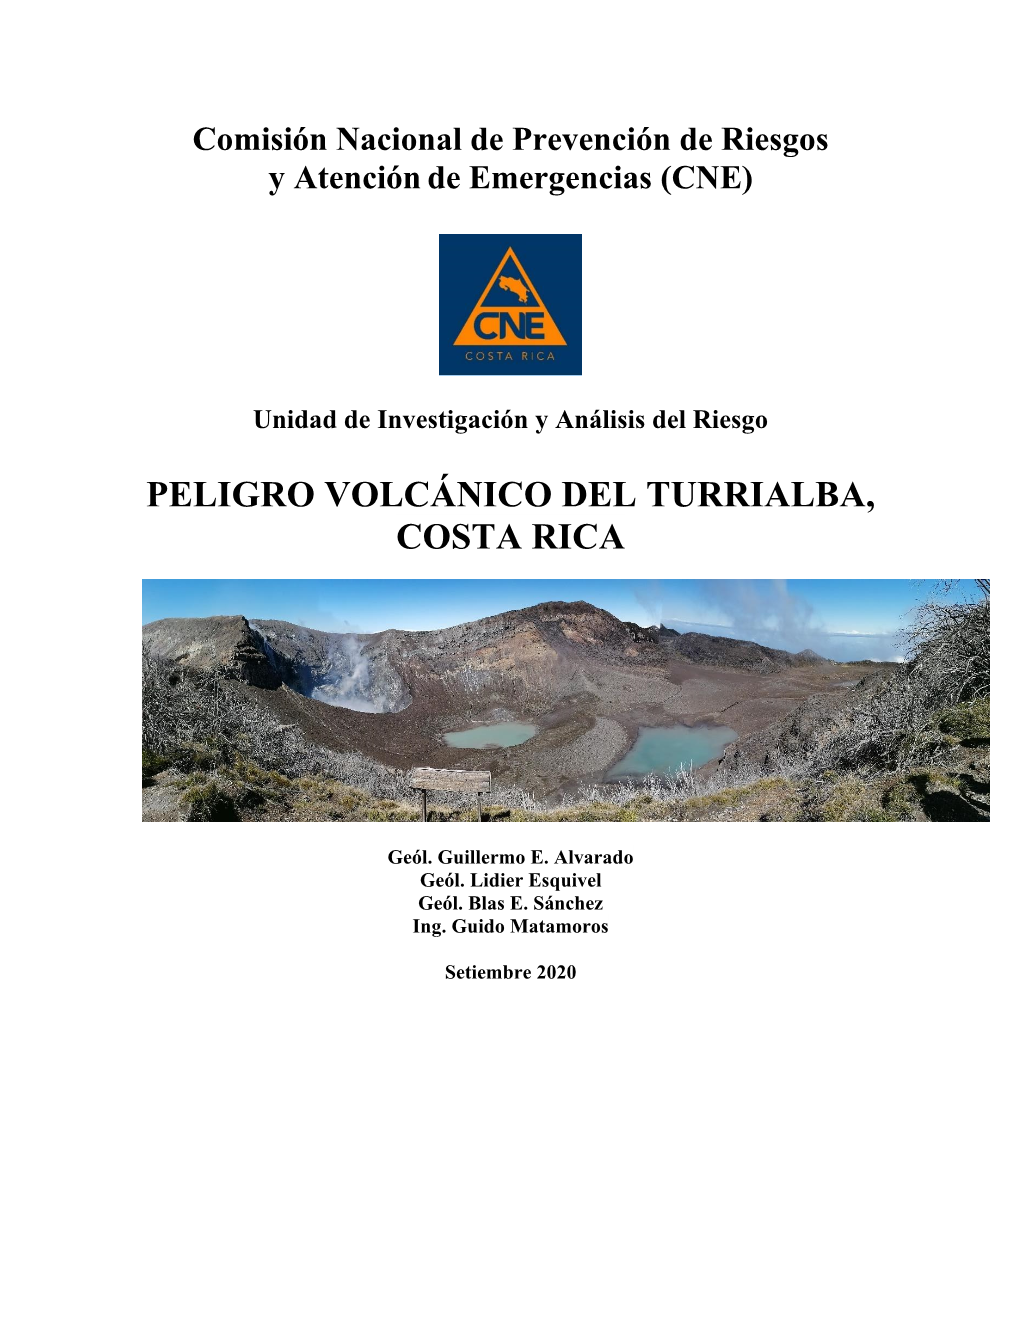 Peligro Volcánico Del Turrialba, Costa Rica